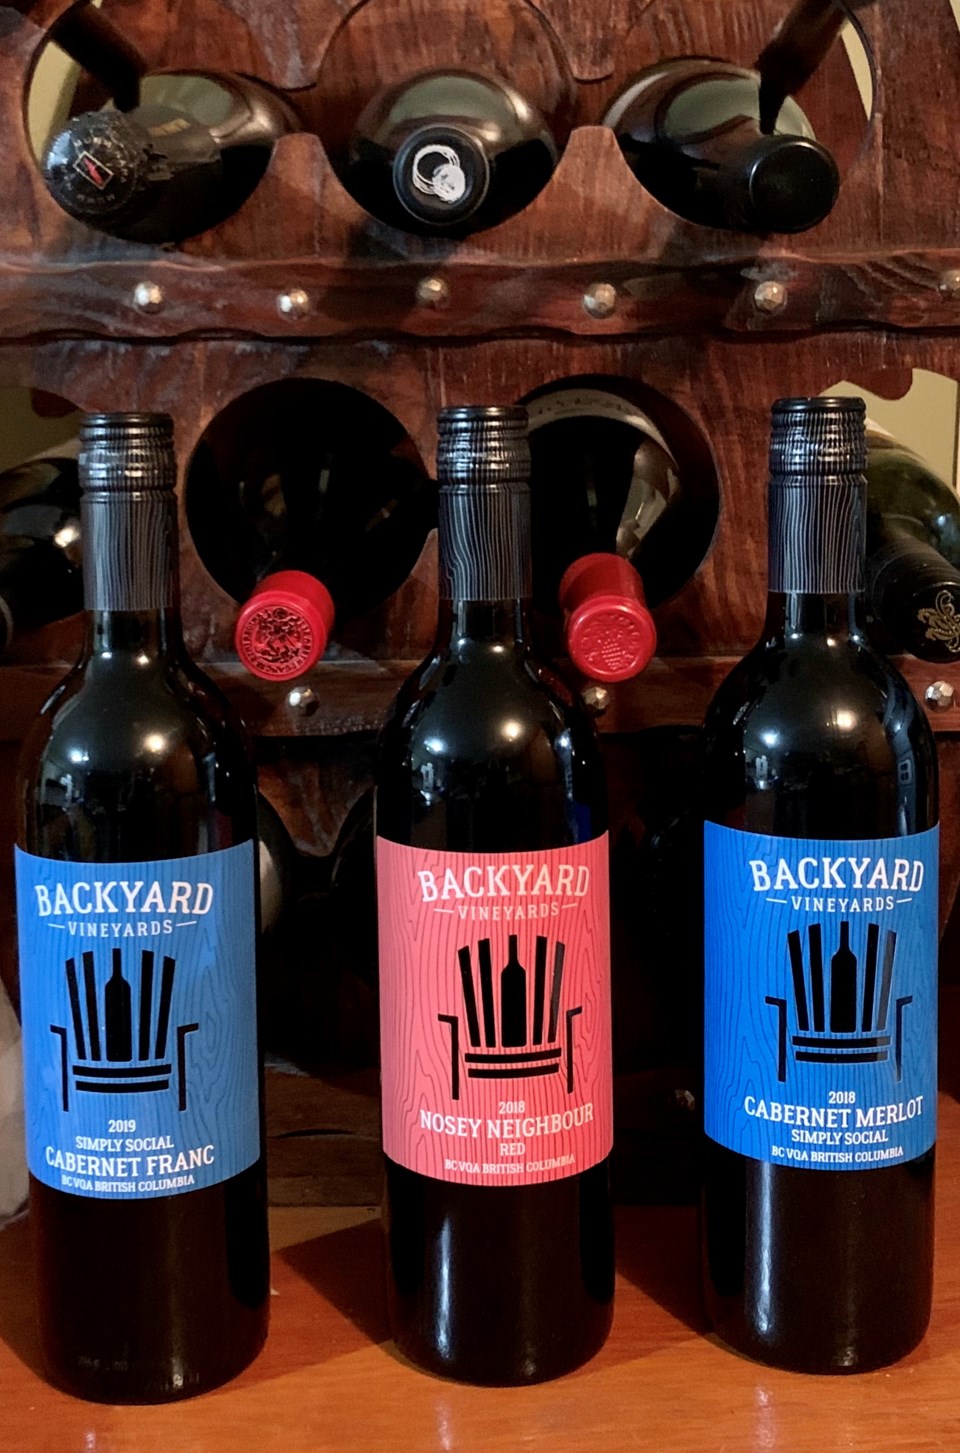 Casual backyard wines